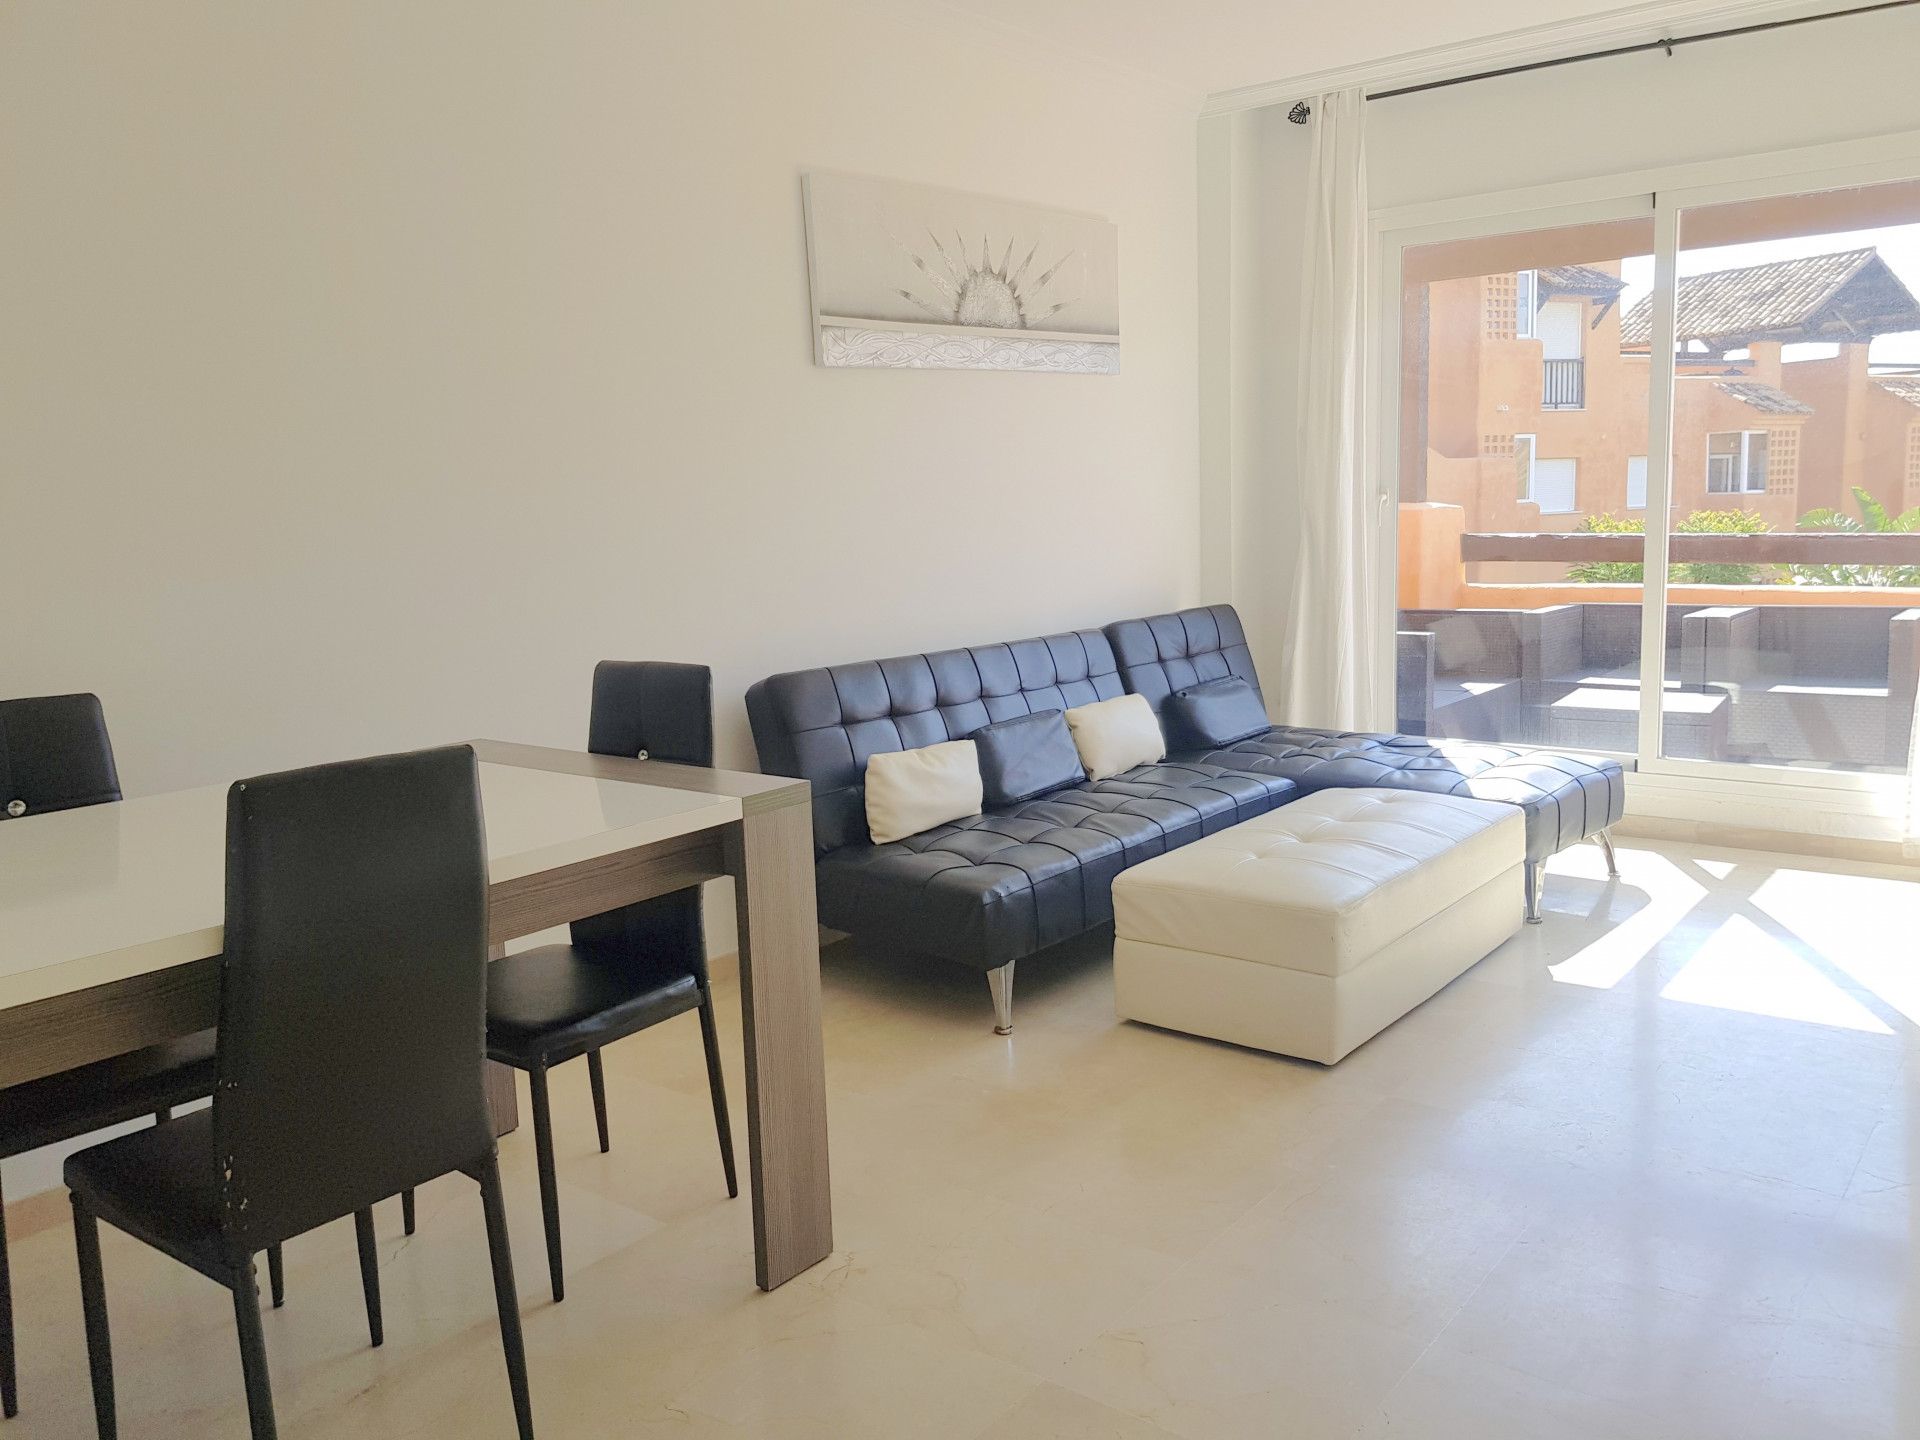 2 bedroom apartment in Casares Costa